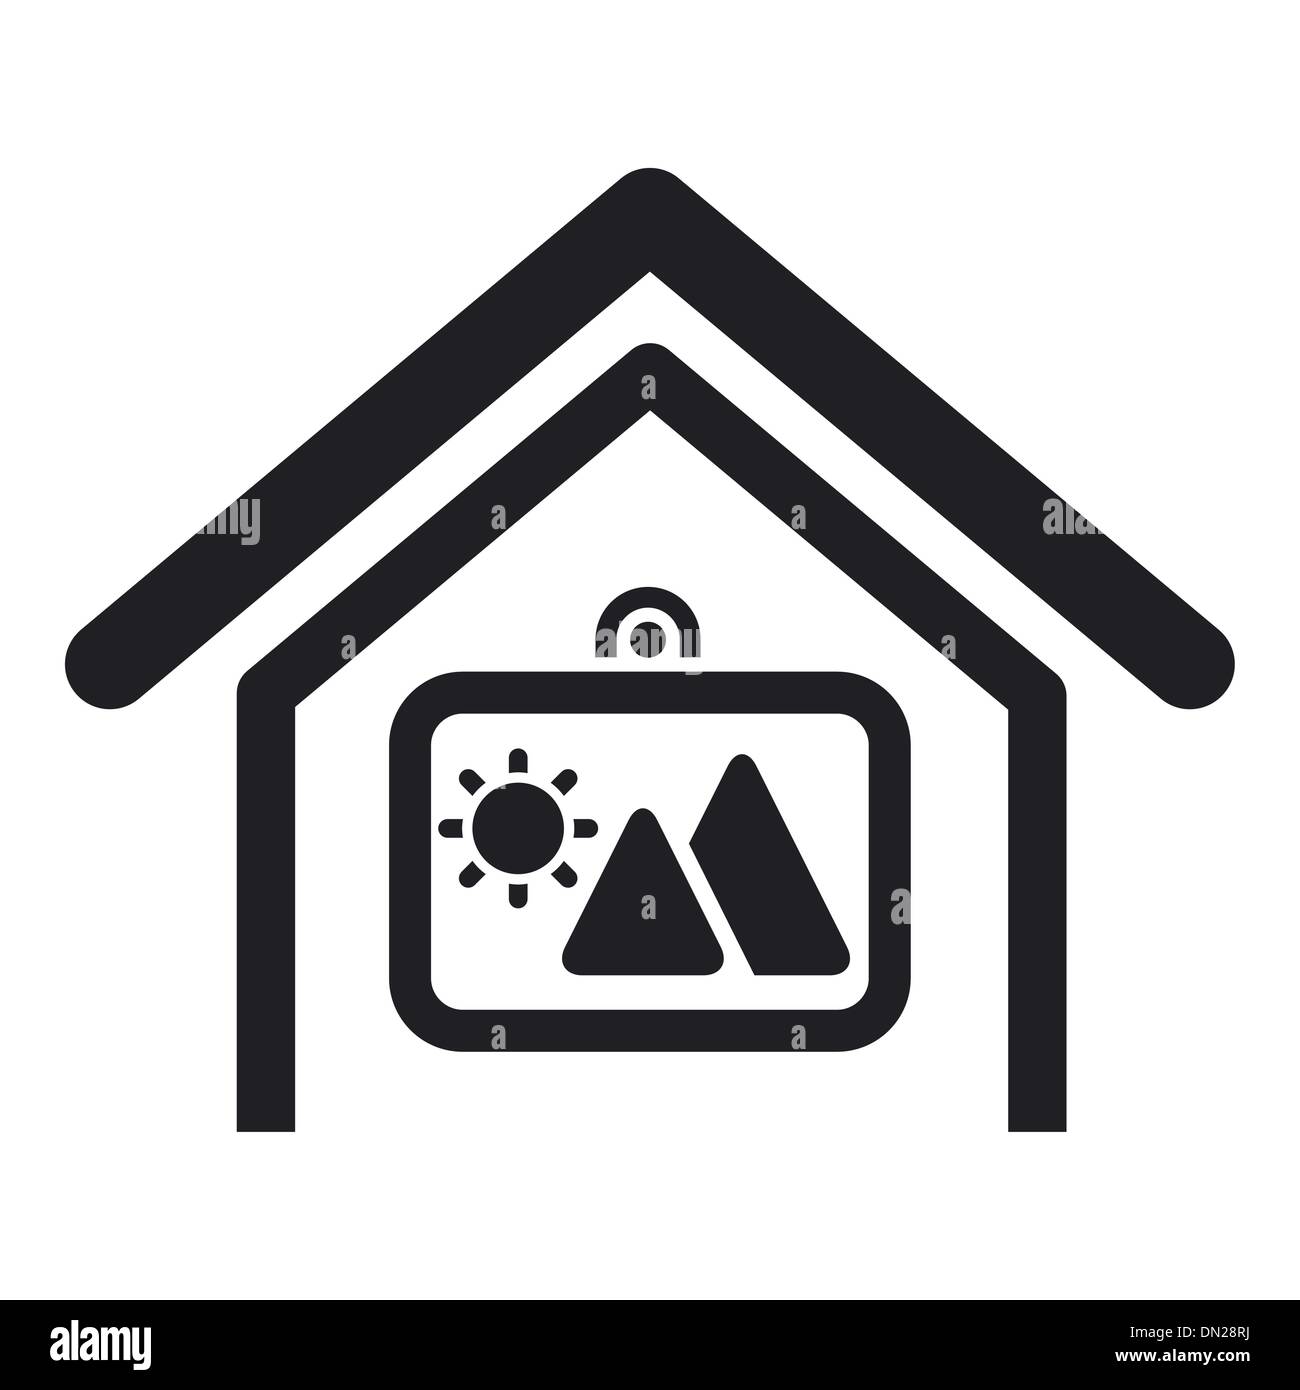 Vector illustration of single home decor icon Stock Vector Image ...